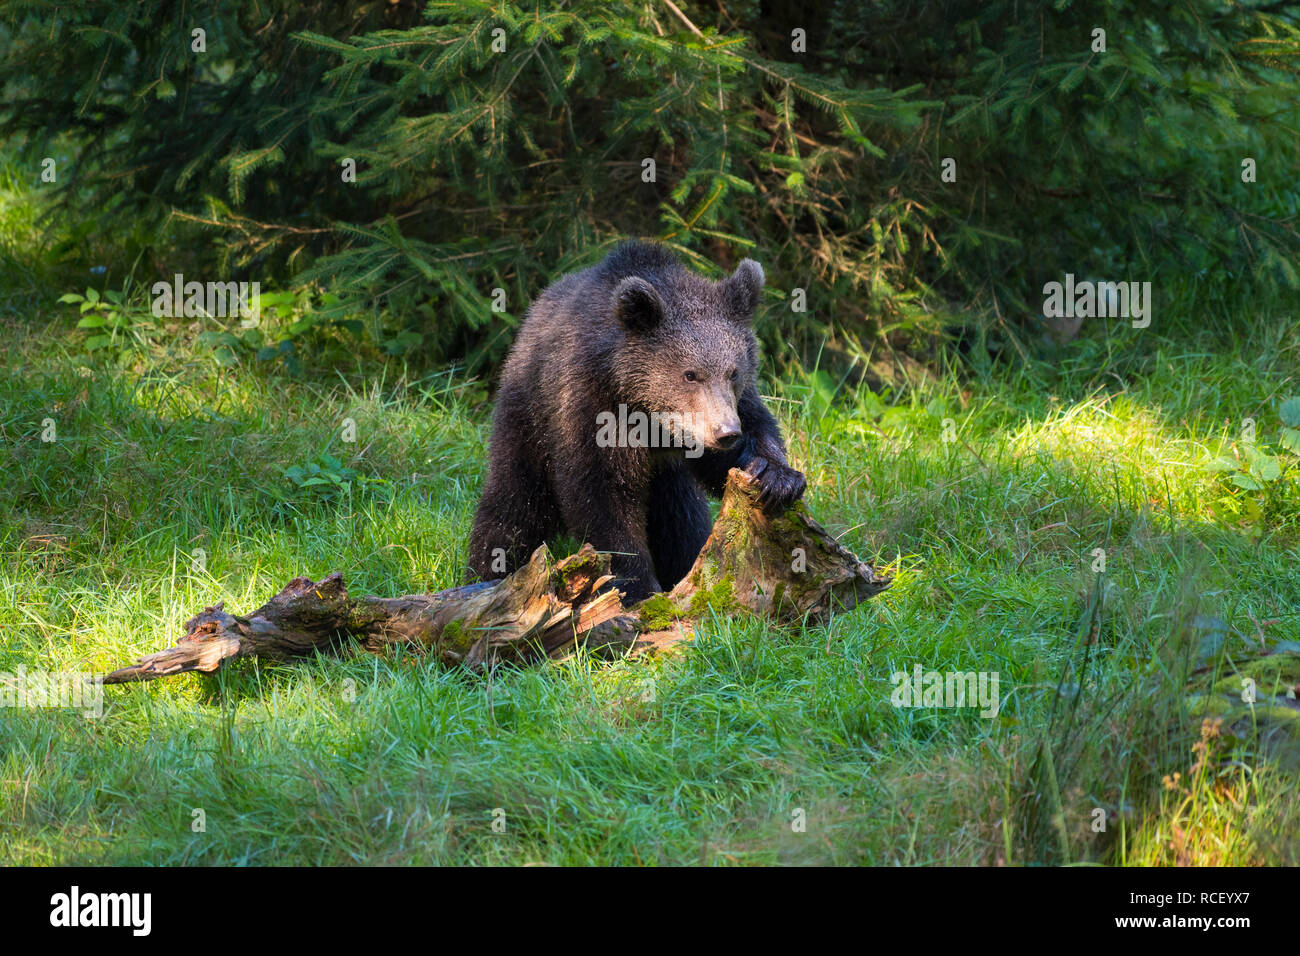 European Brown Bears, Ursus arctos, Cub Stock Photo